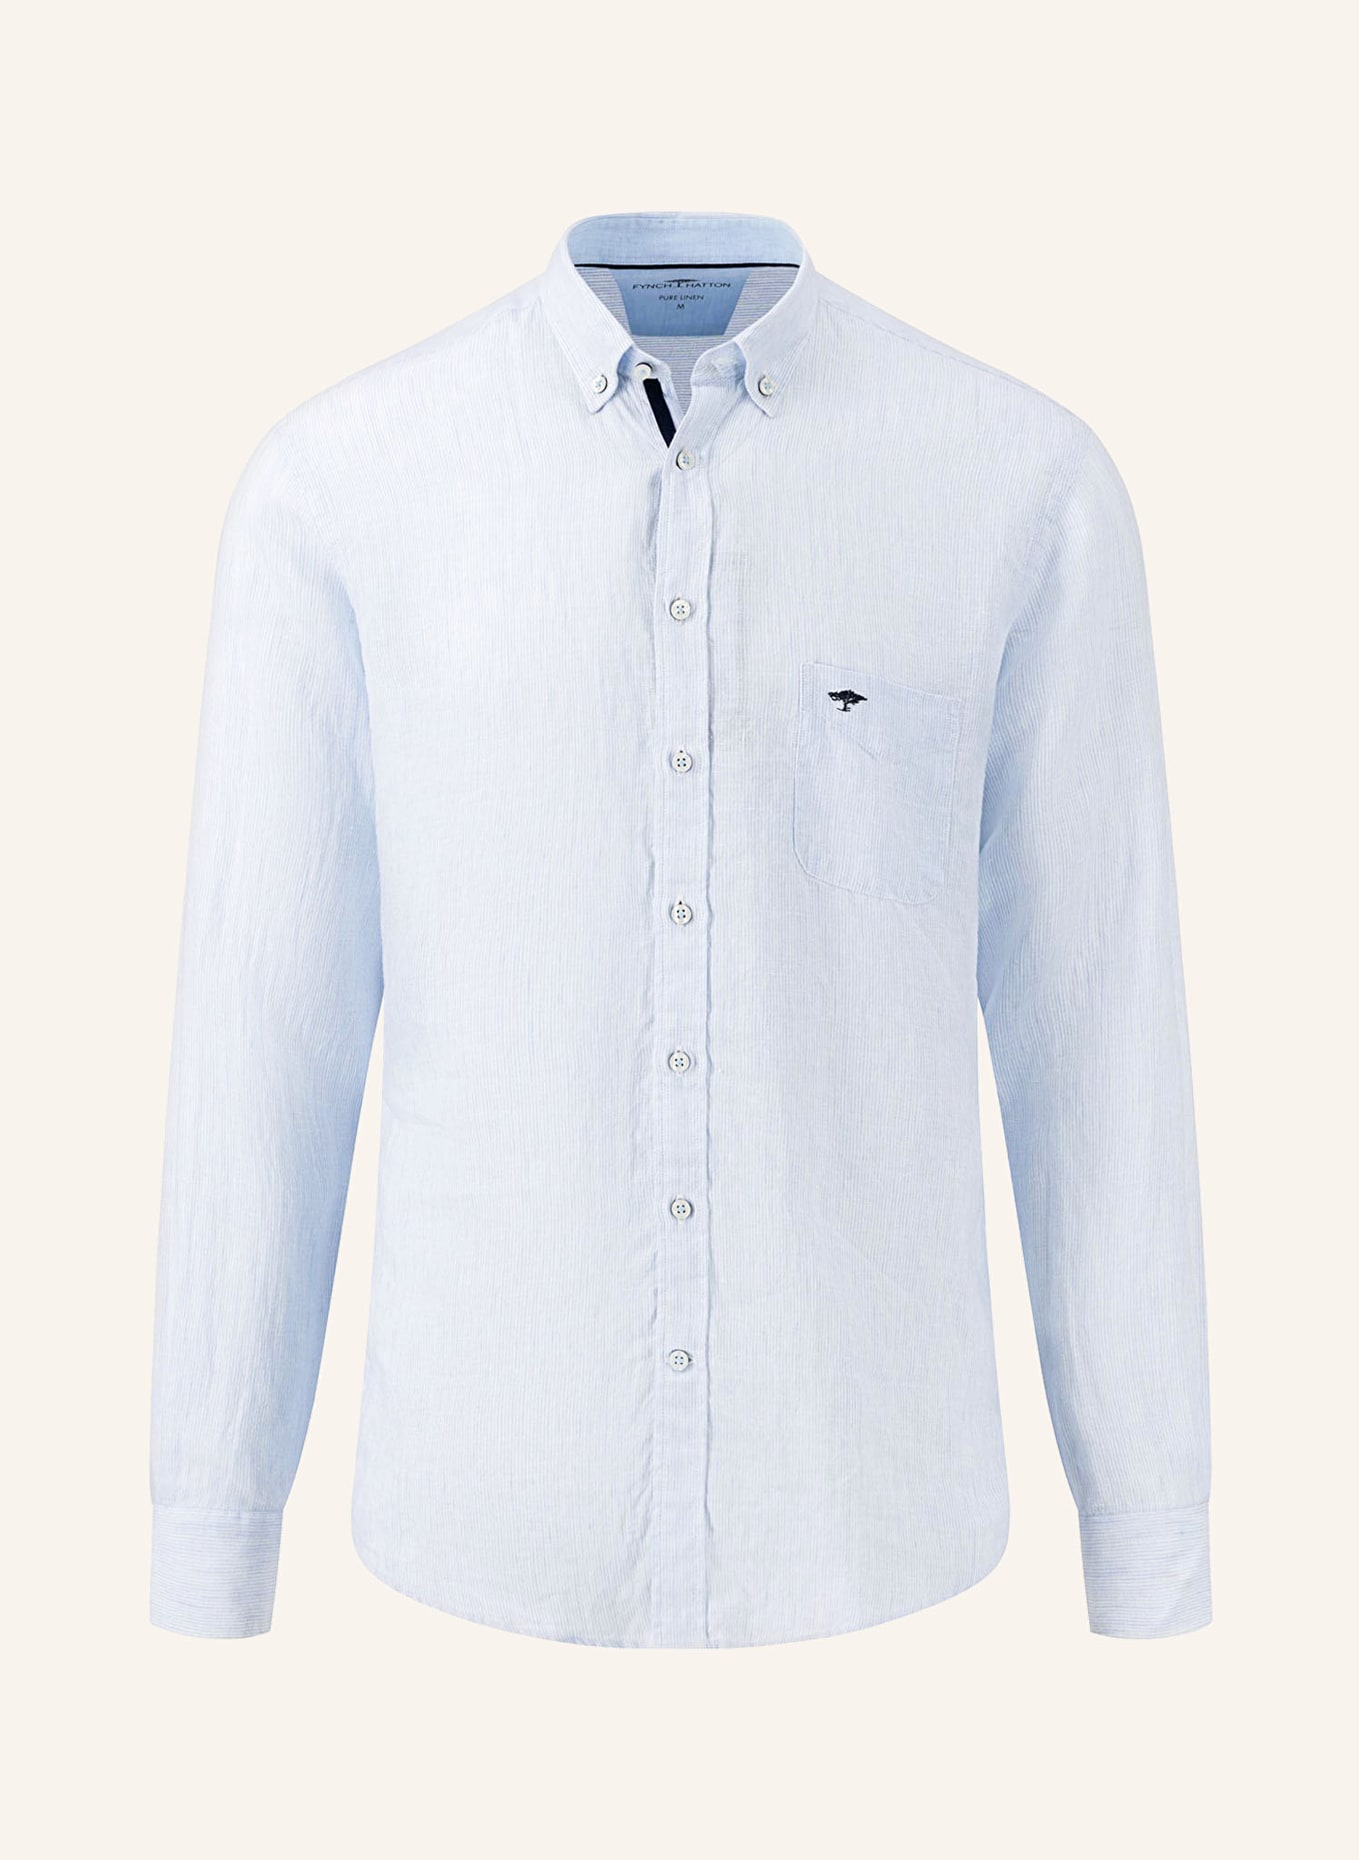 FYNCH-HATTON Leinenhemd Regular Fit, Farbe: HELLBLAU (Bild 1)